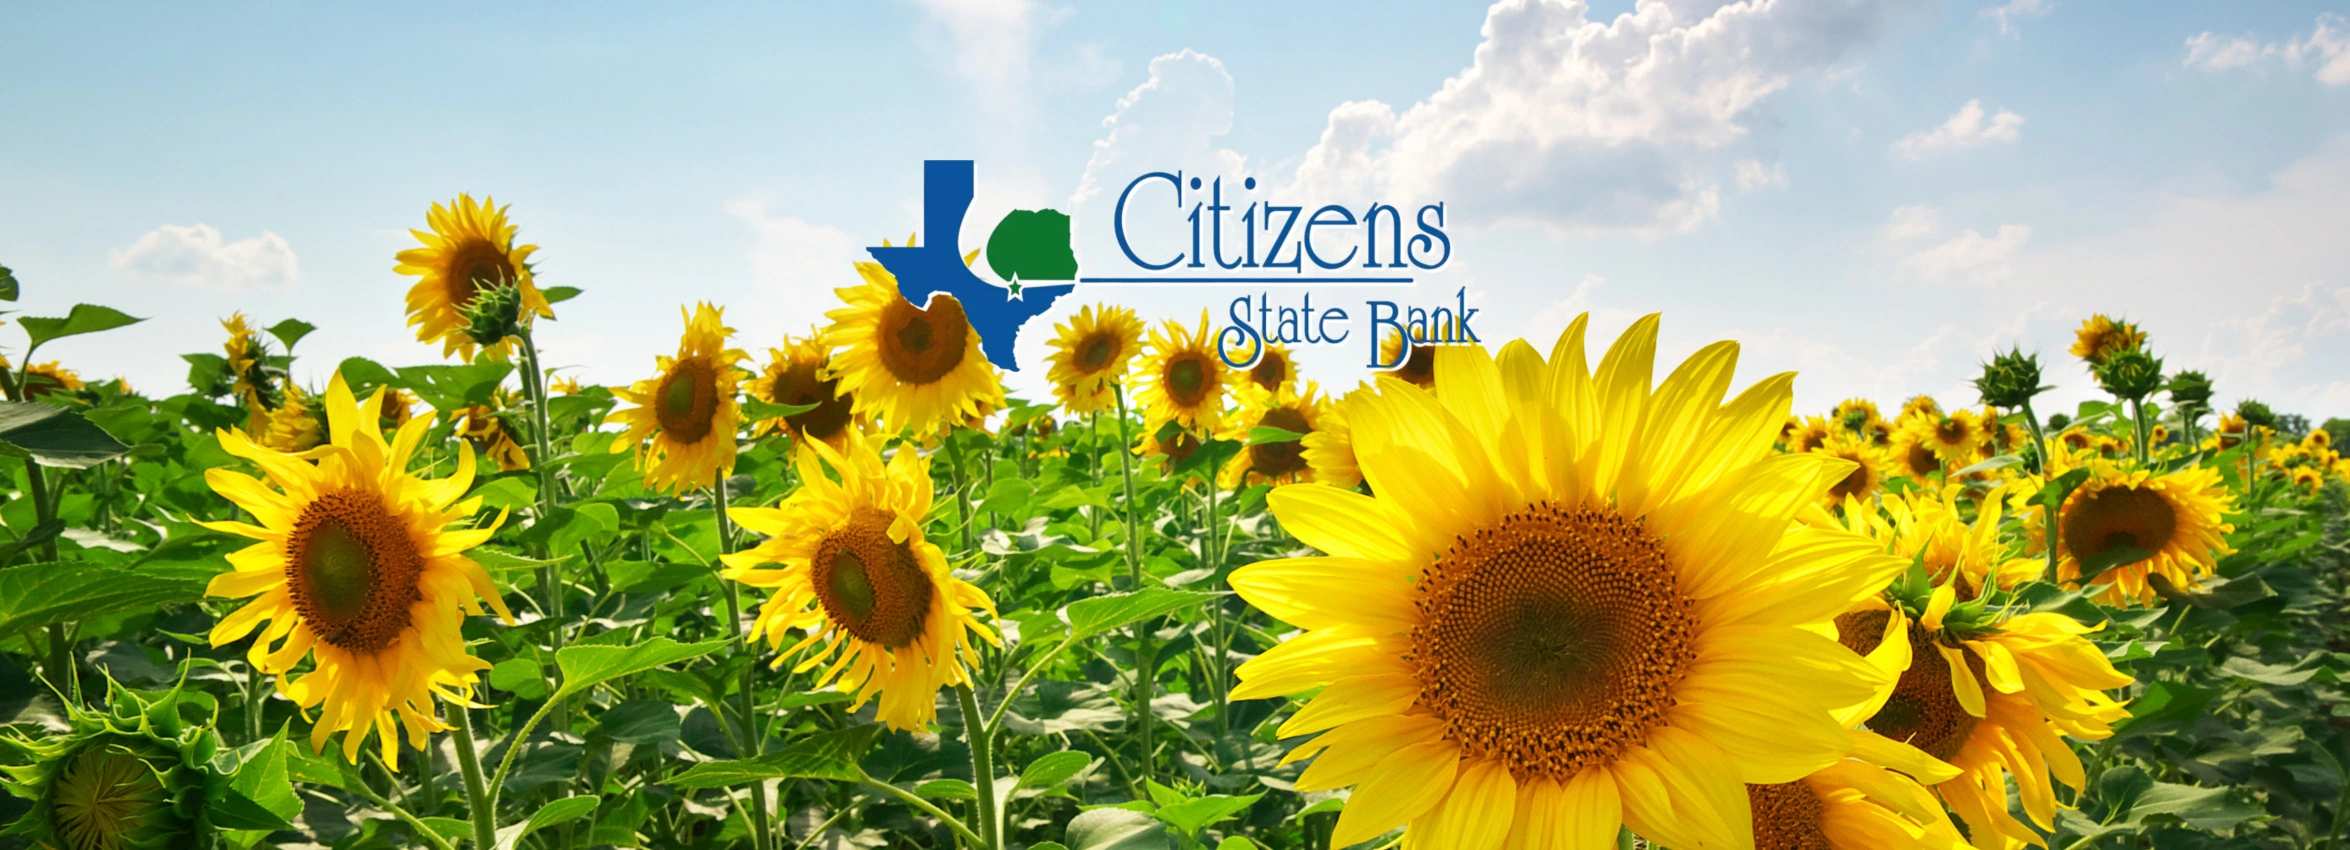 Citizens-State-Bank_Desktop_ET